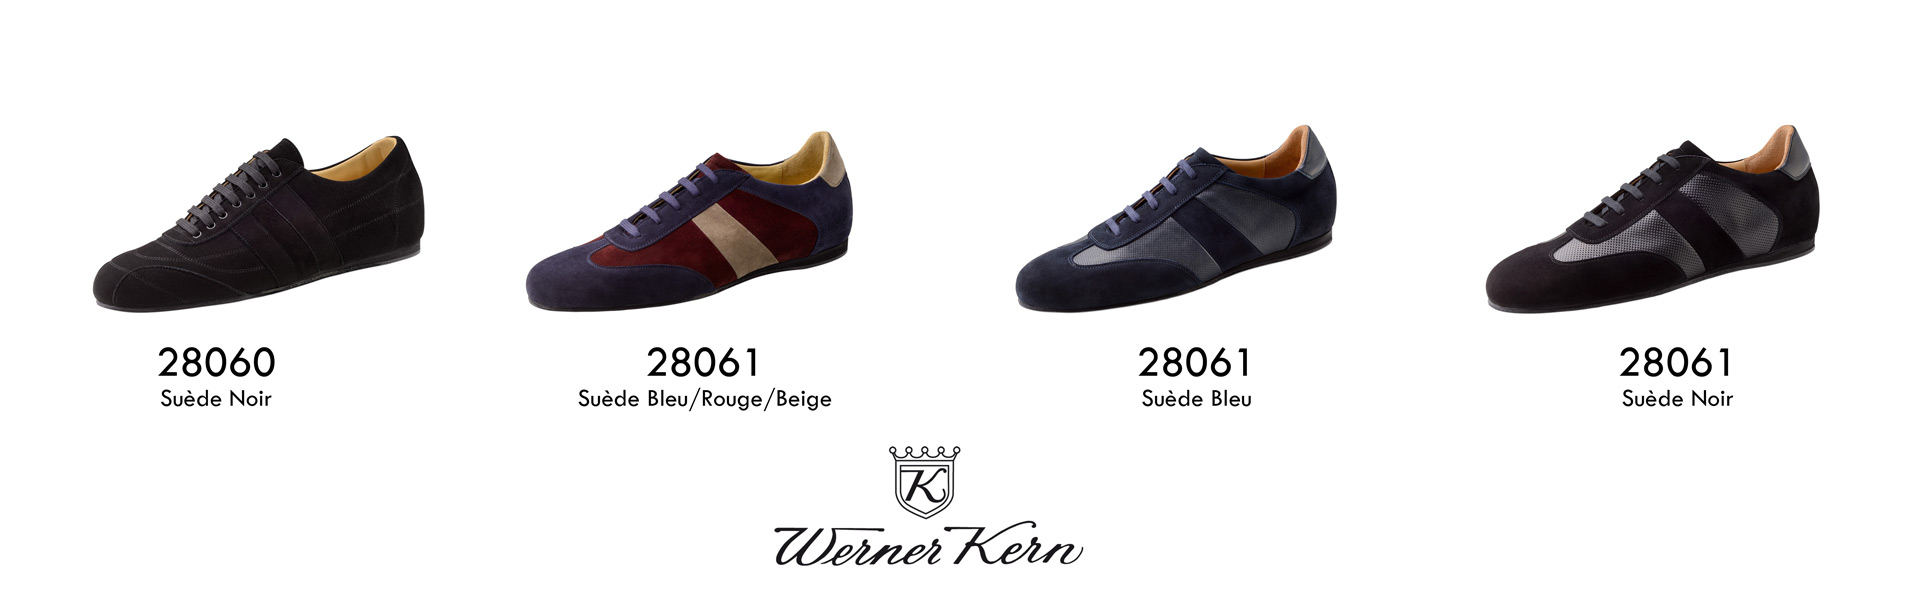 Werner Kern Chaussures de Danse 28060 28061